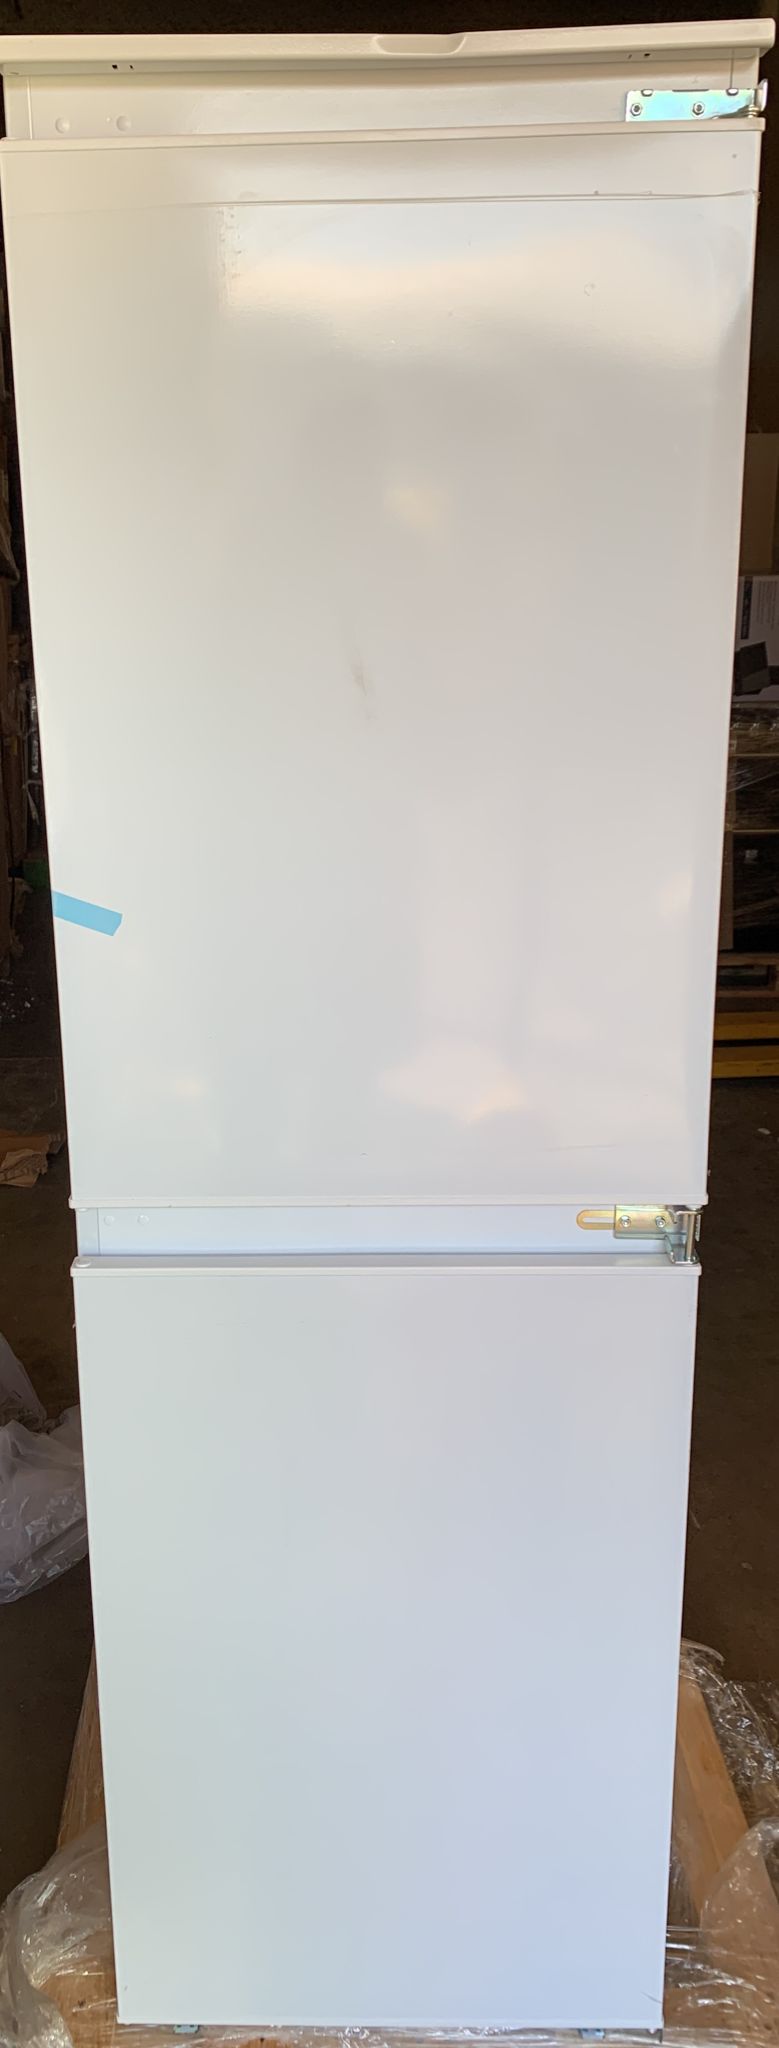 GoodHome-Automatic defrost Fridge freezer-Integrated- White-GHBI5050FFUK-50:50-2336